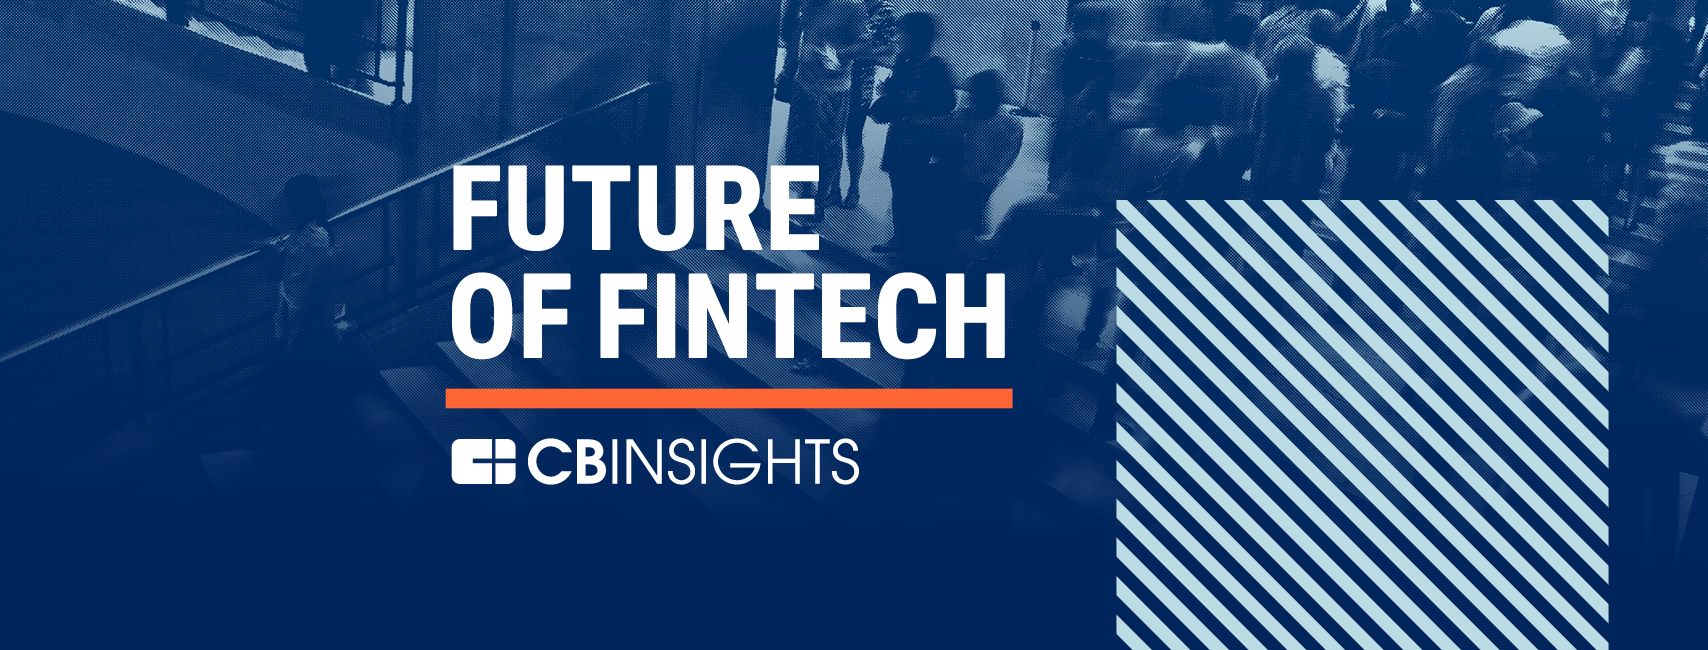 Future of Fintech 2018 - NYC - CBINSIGHTS